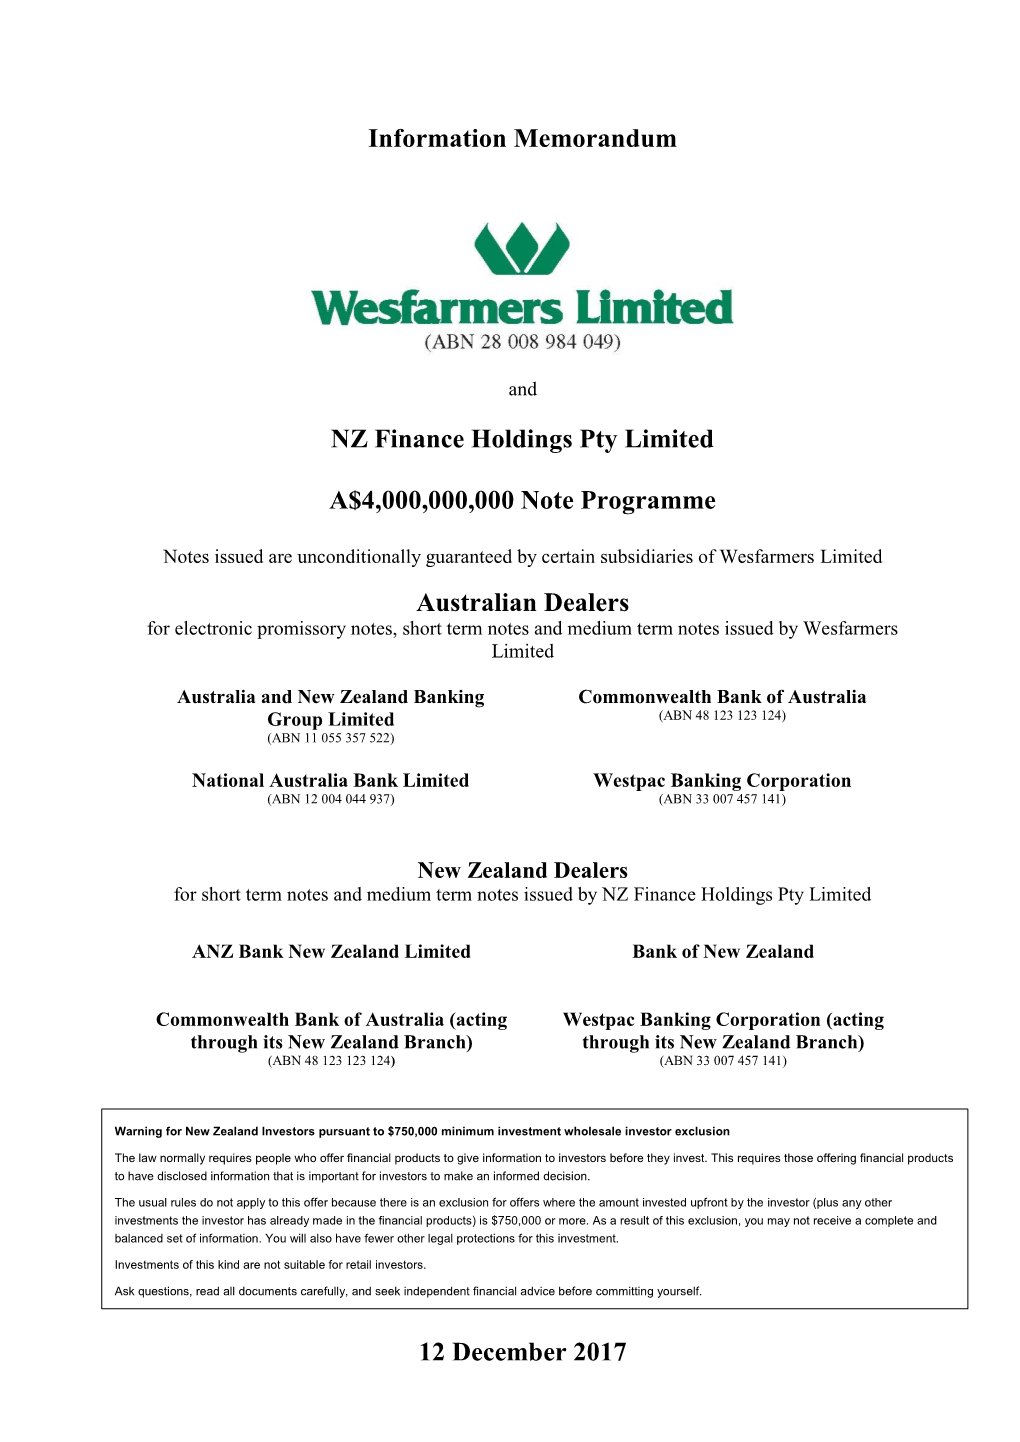 Information Memorandum NZ Finance Holdings Pty Limited A